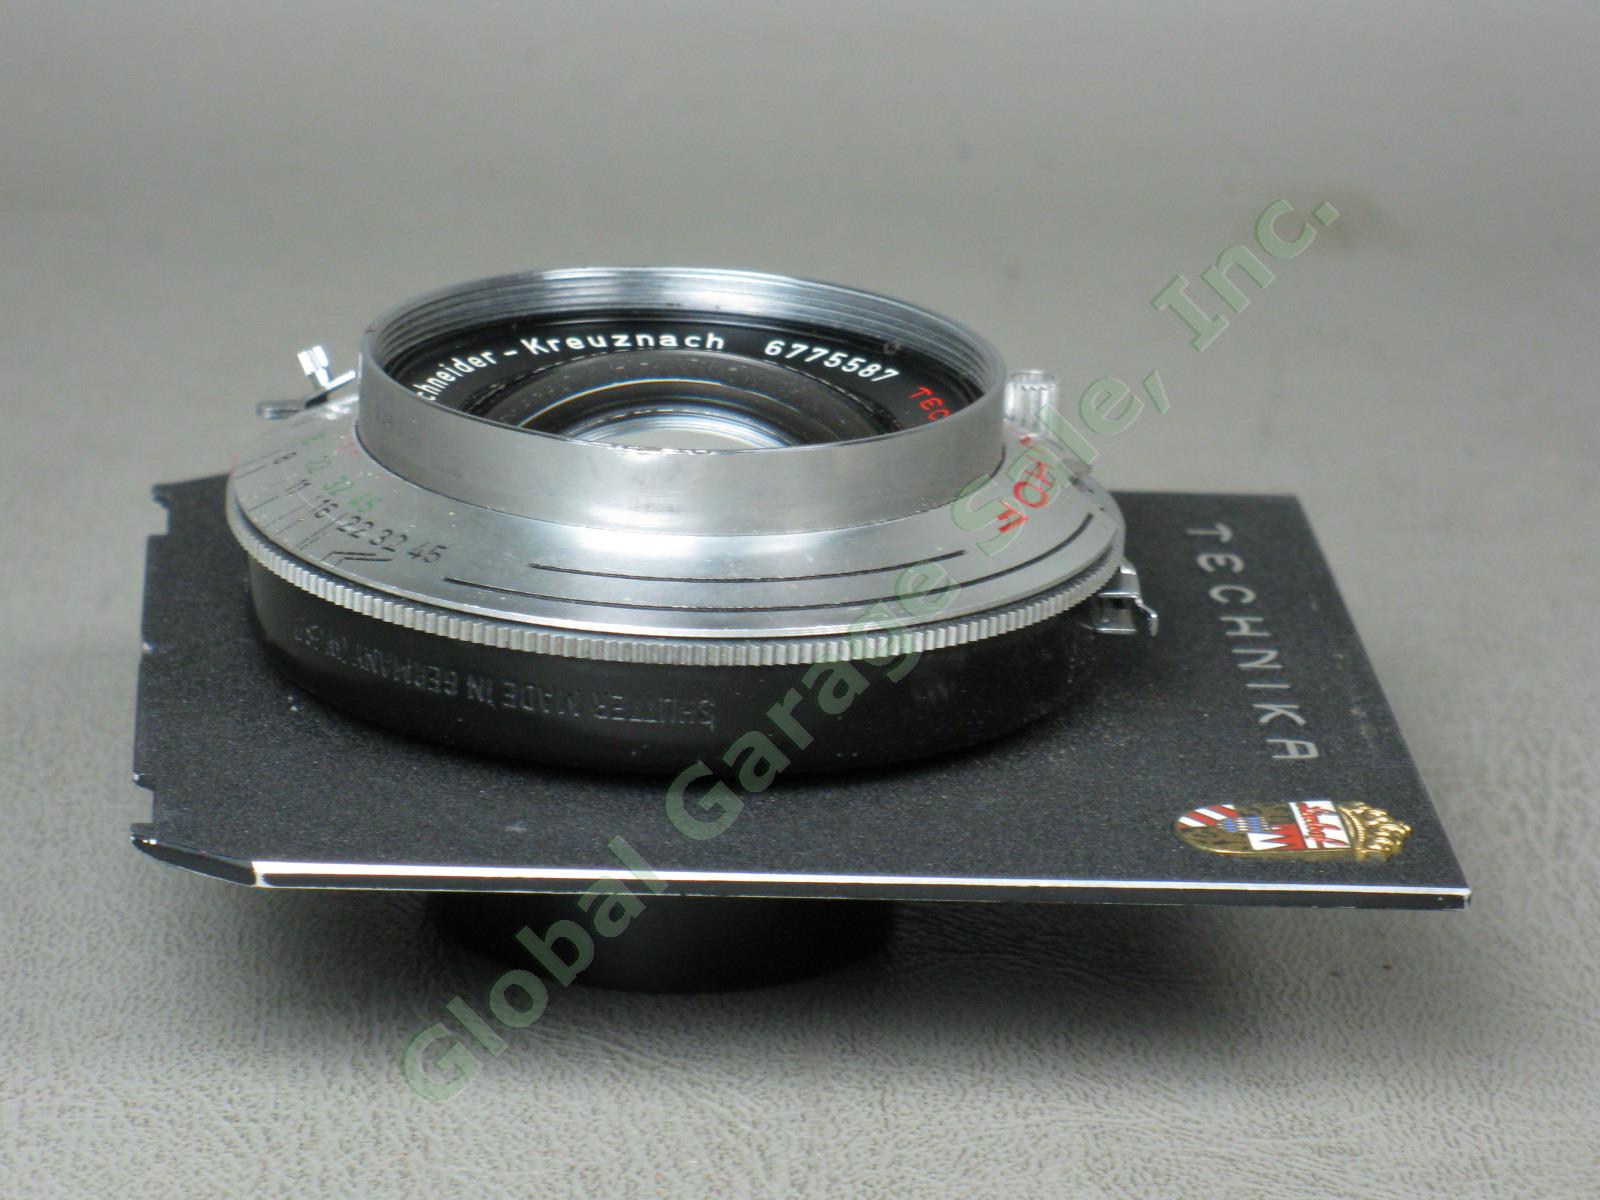 Linhof Technika Symmar 1:5.6 f/5.6 150mm Schneider-Kreuznach Camera Lens 6775587 5